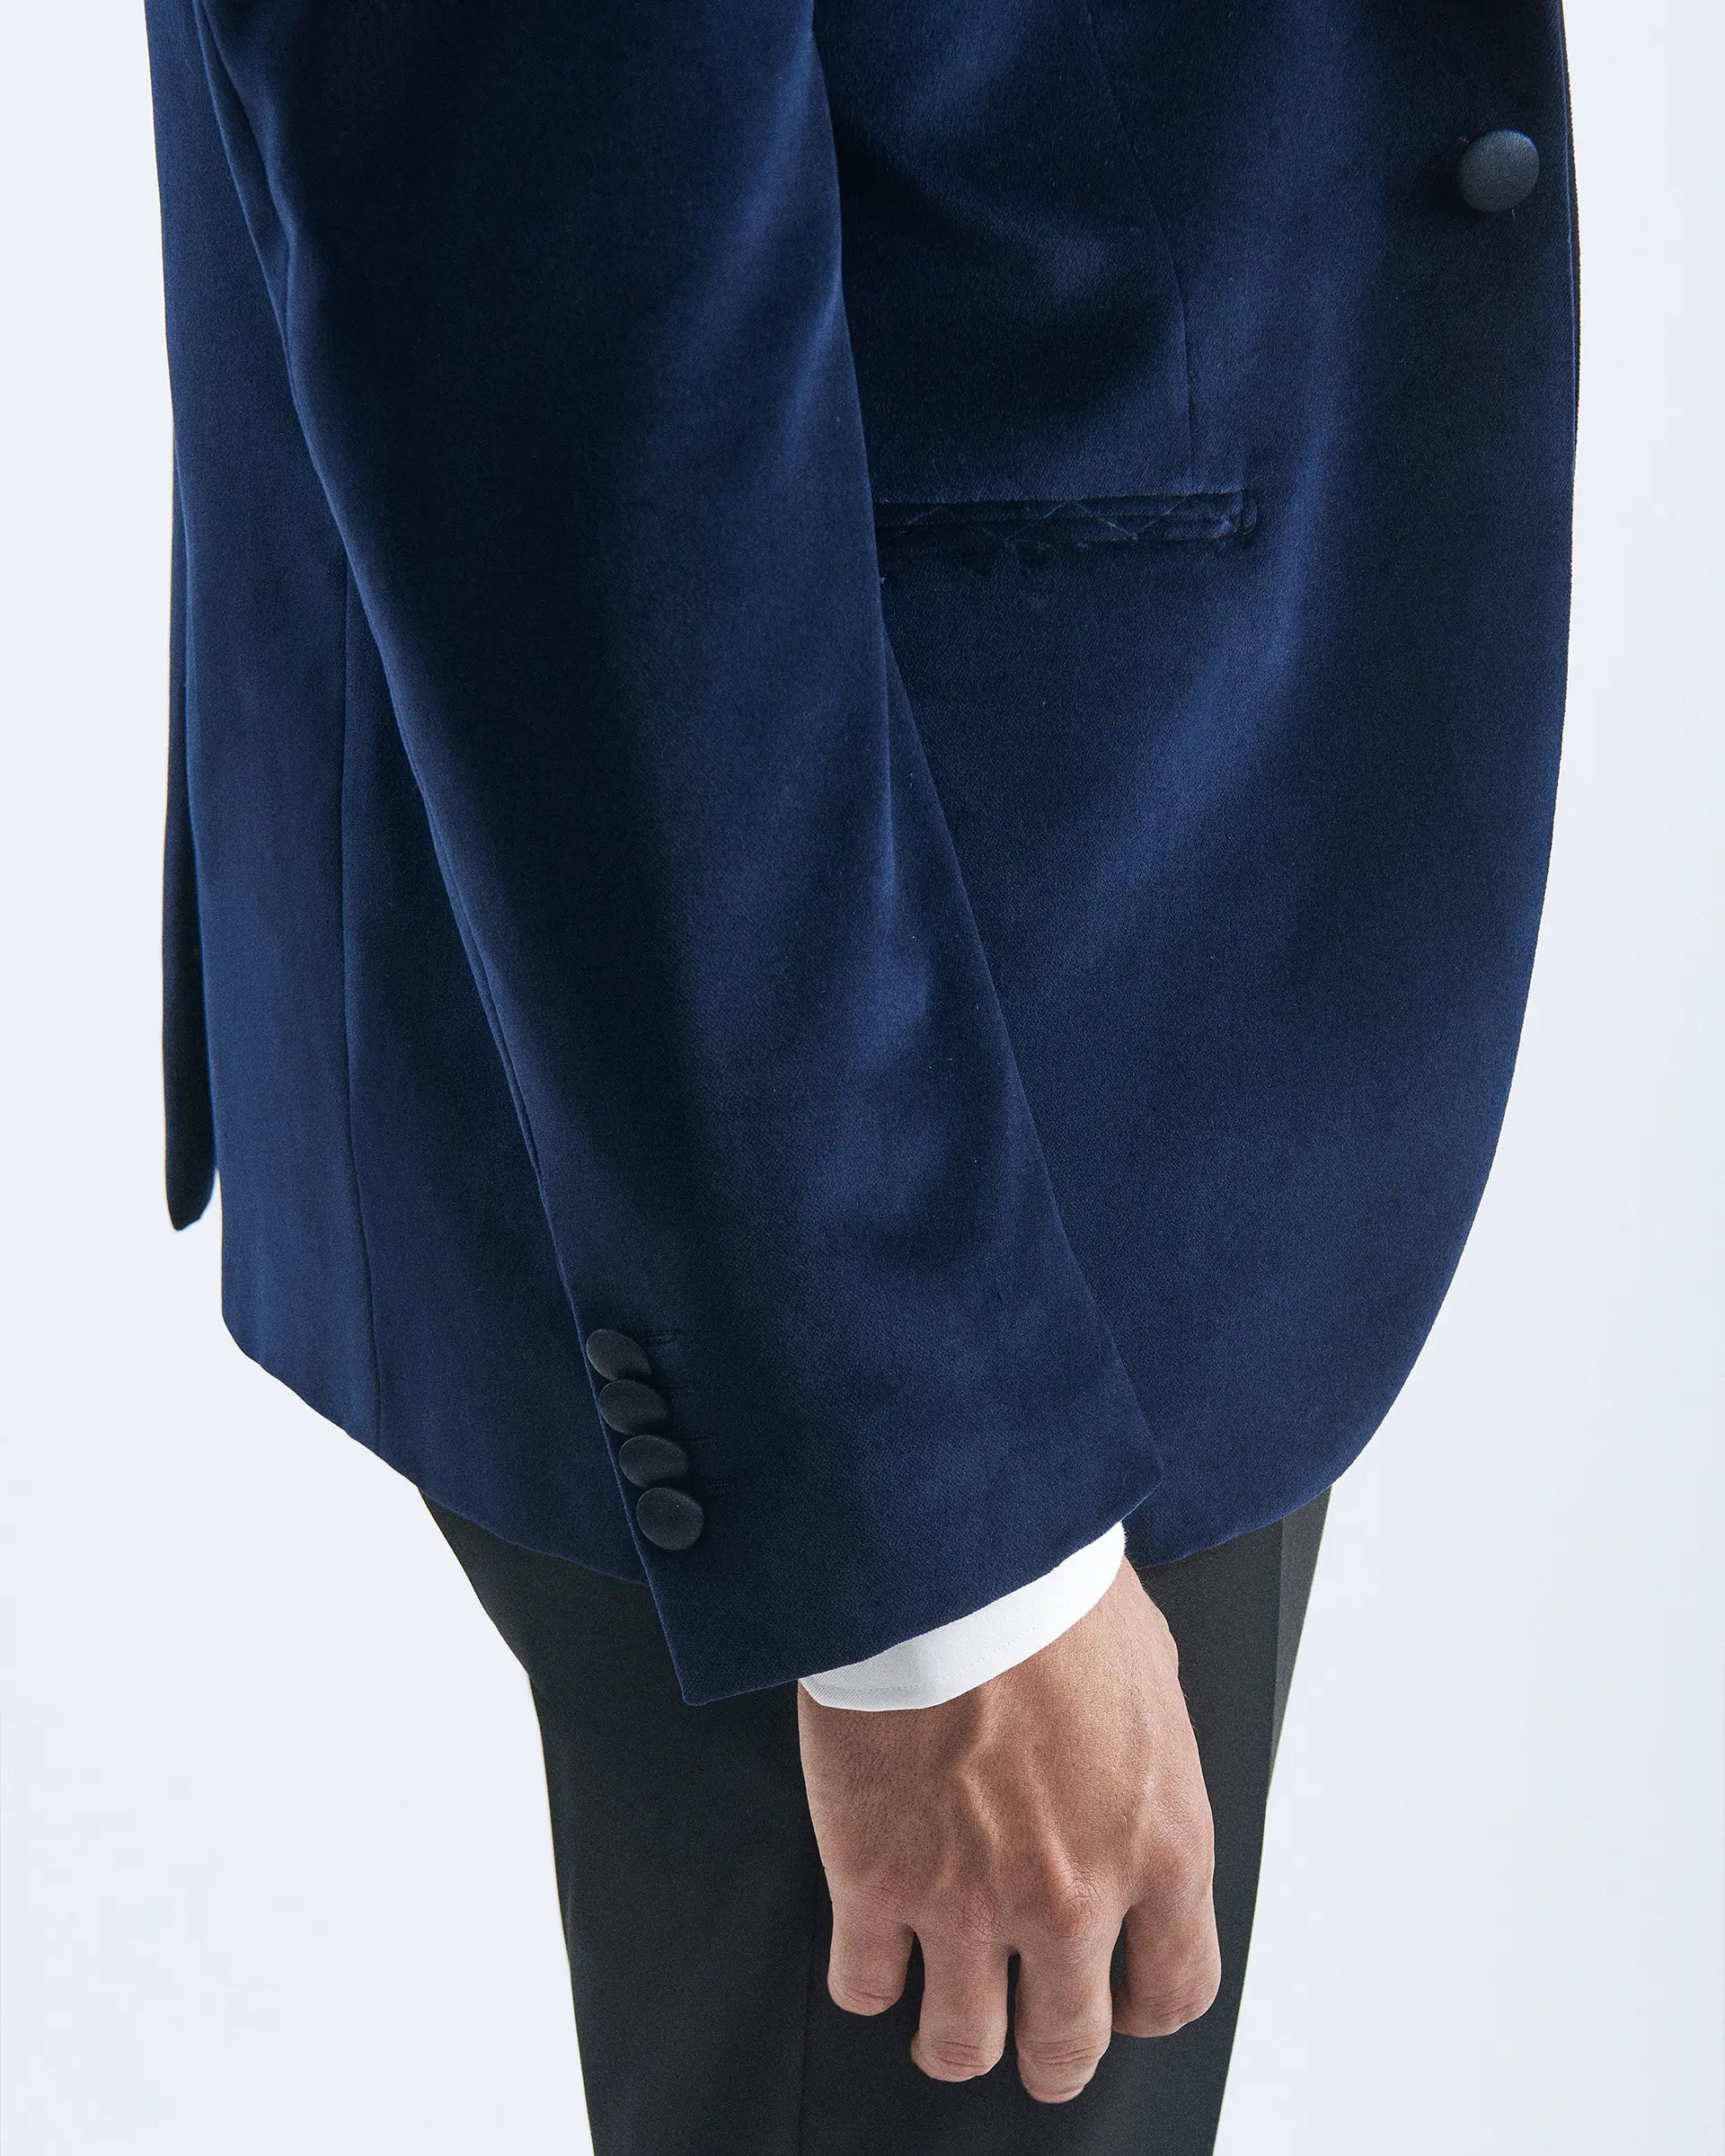 Blue tuxedo jacket in smooth cotton velvet